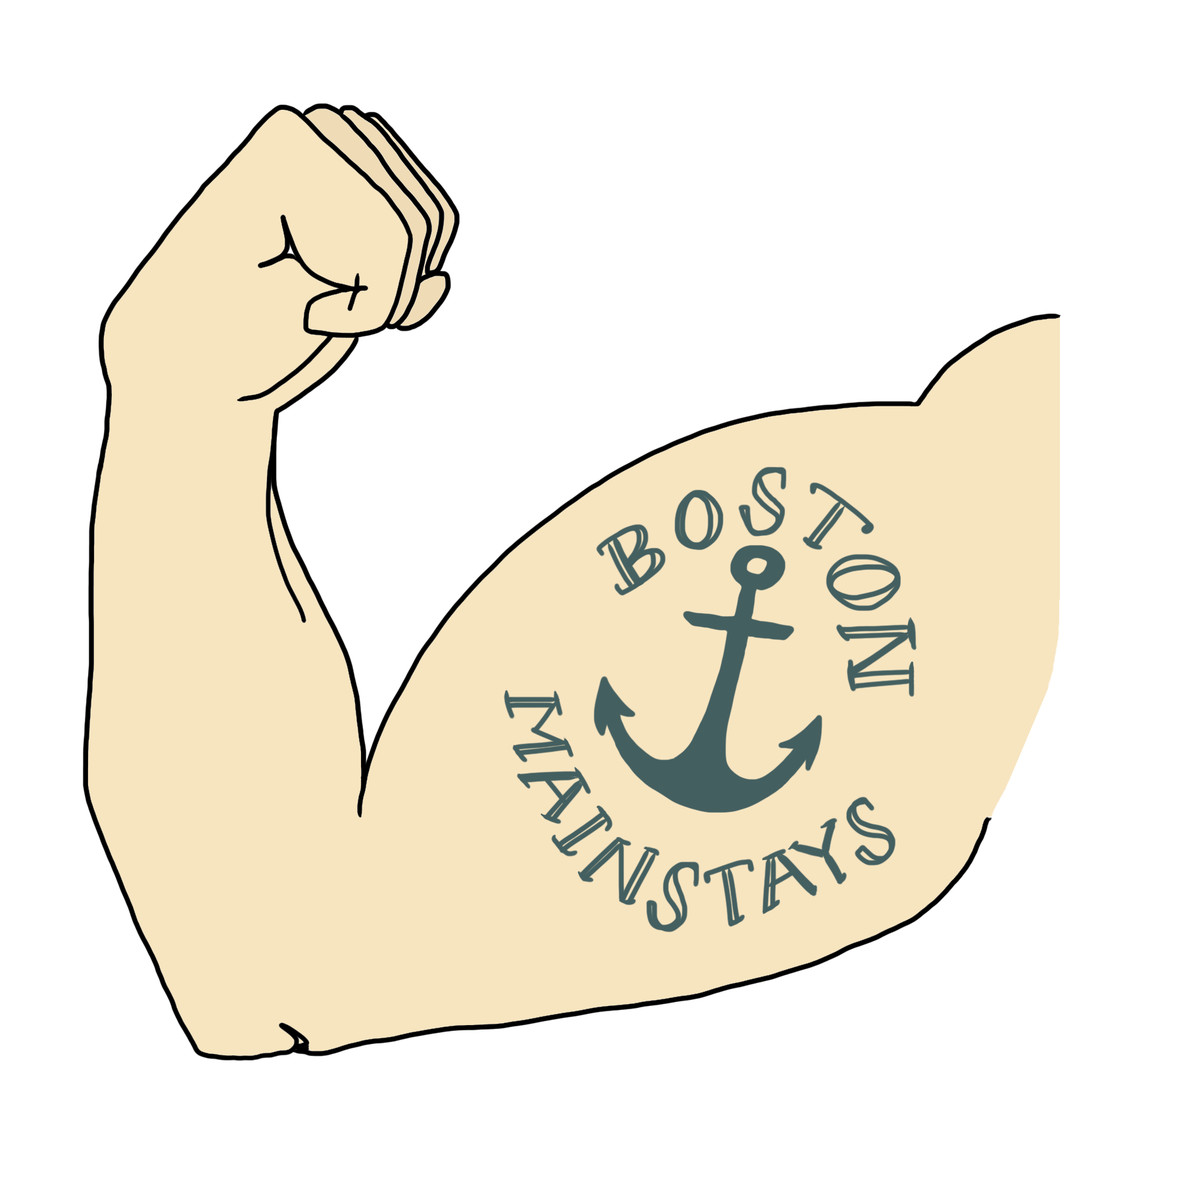 Boston Mainstays logo square